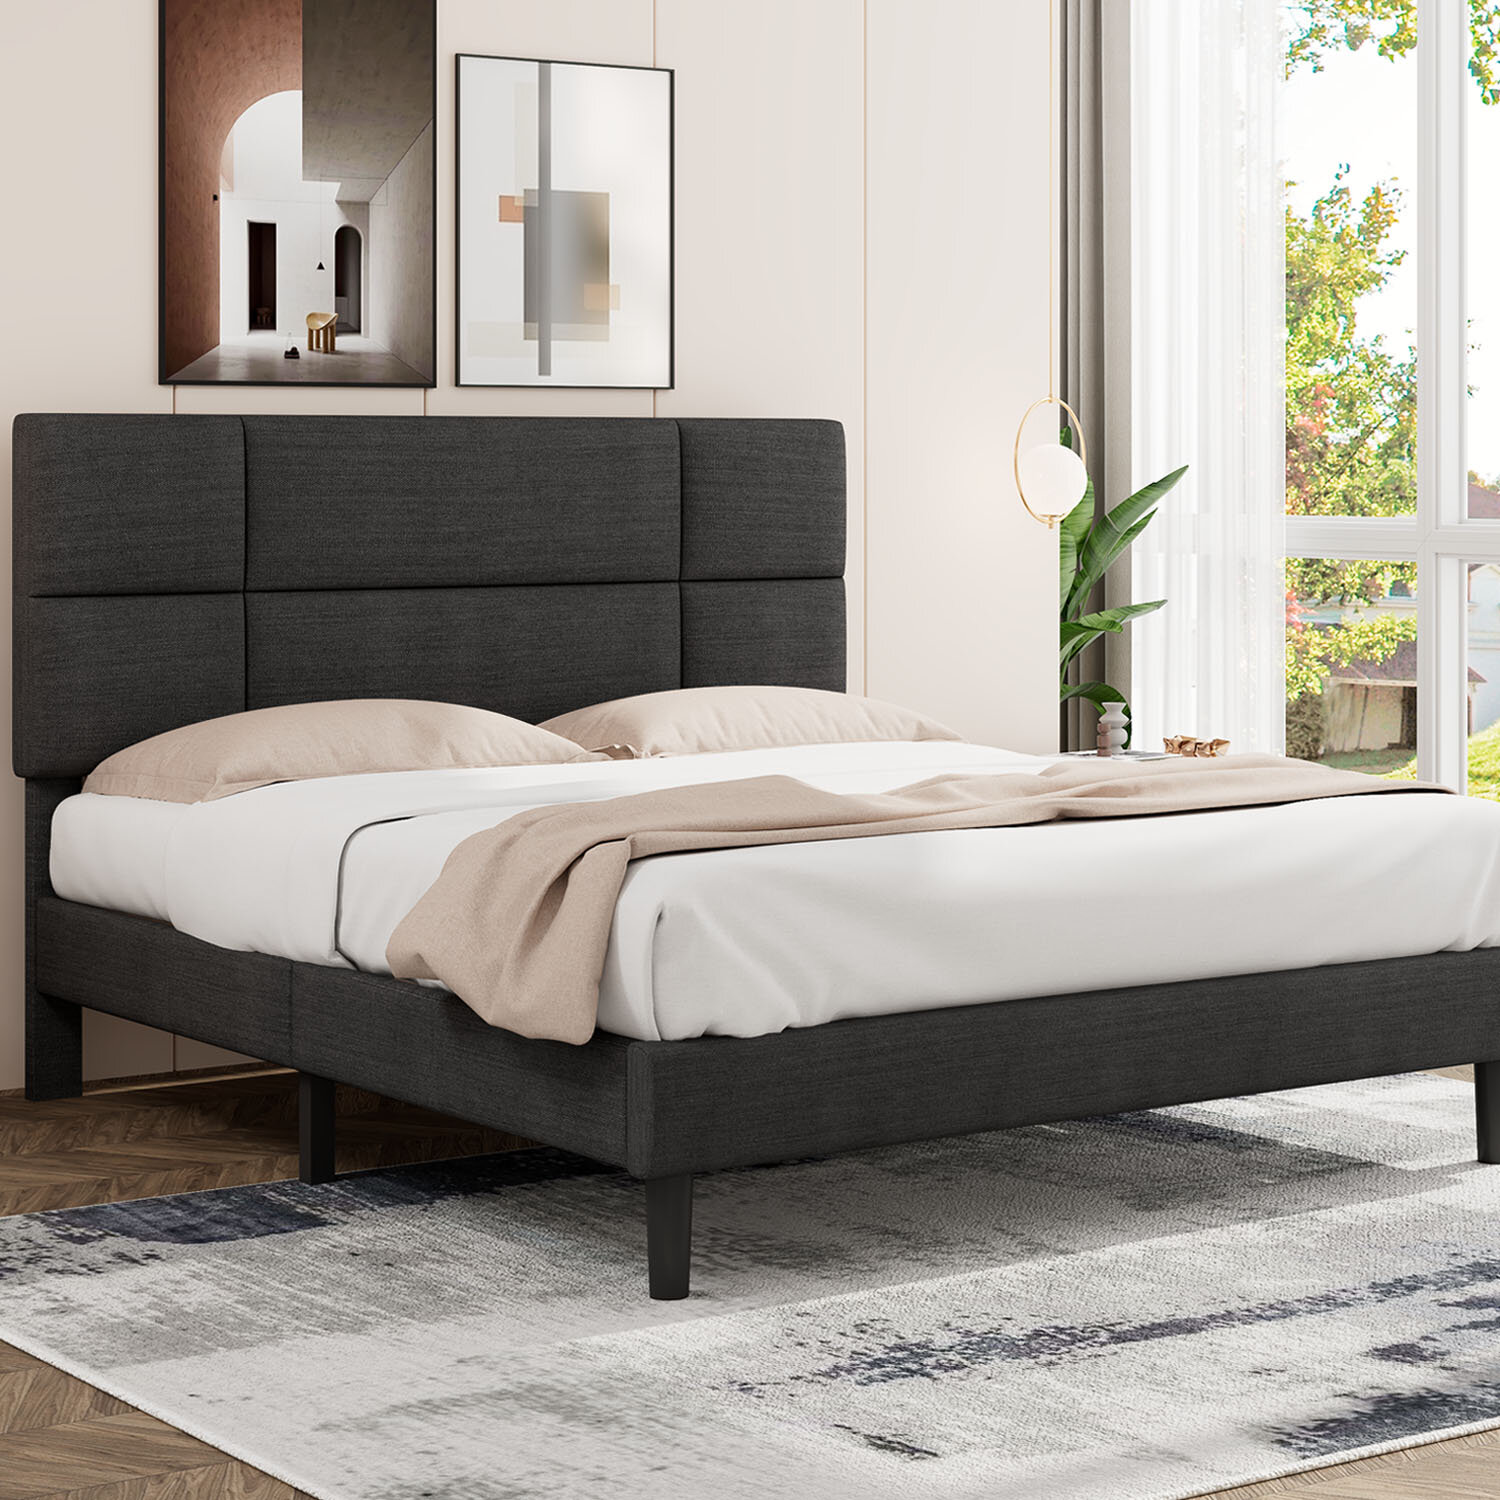 Adjustable Black Steel Bed Frame Twin Full or Queen Size Bedroom Furniture 